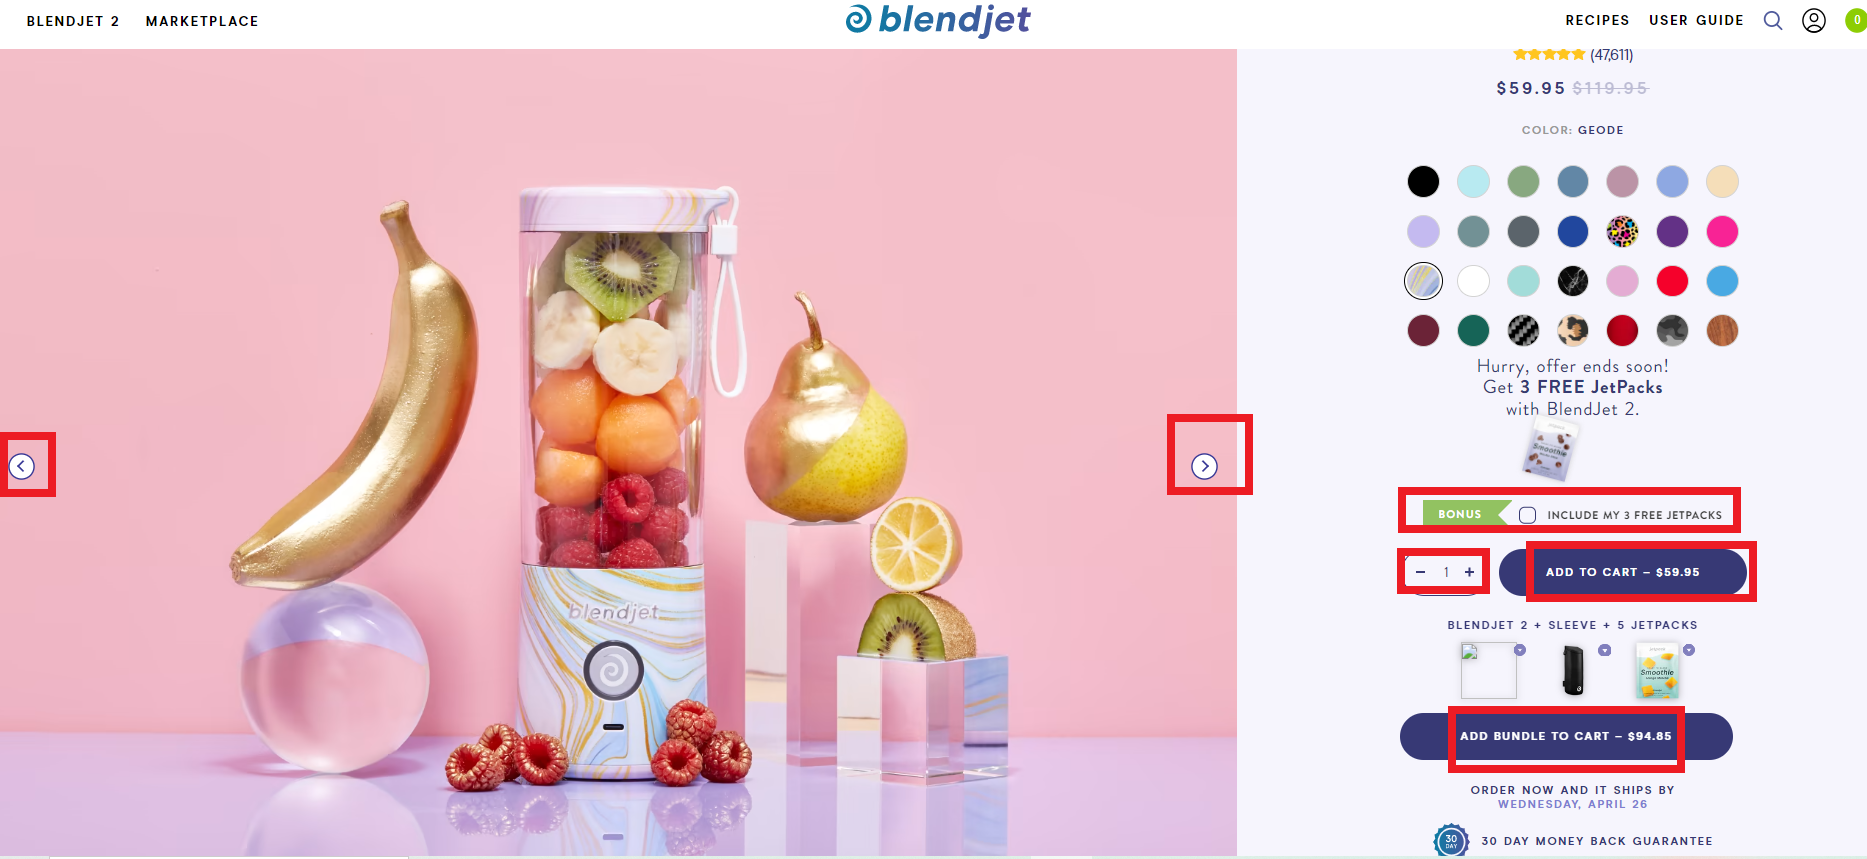 Inside BlendJet's in-store merchandising strategy